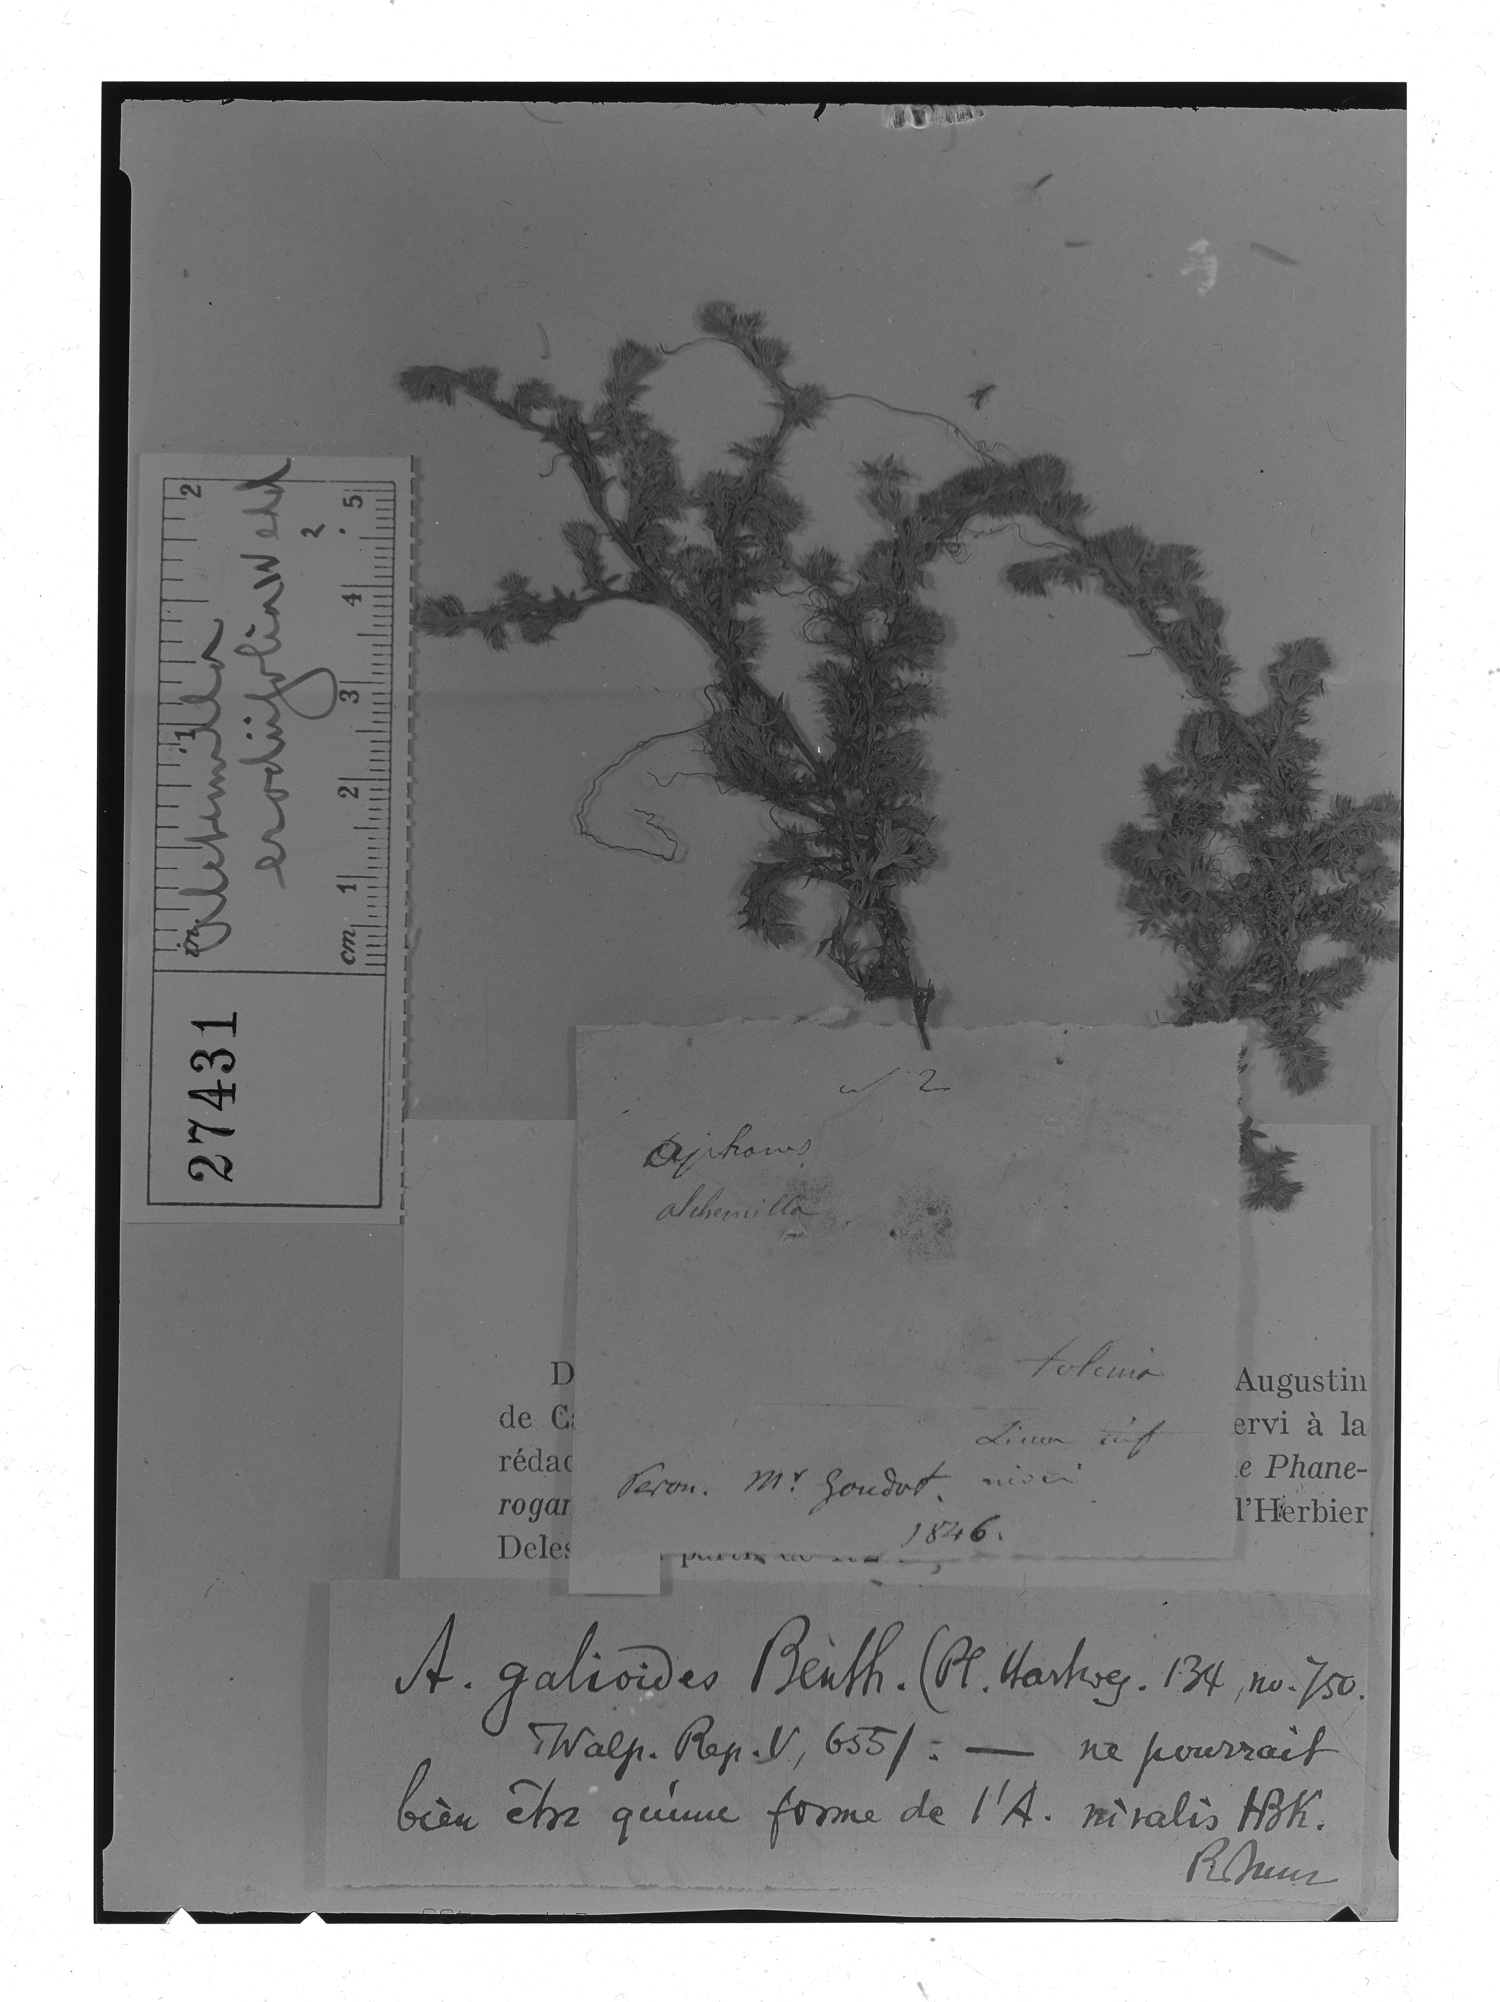 Alchemilla erodiifolia image